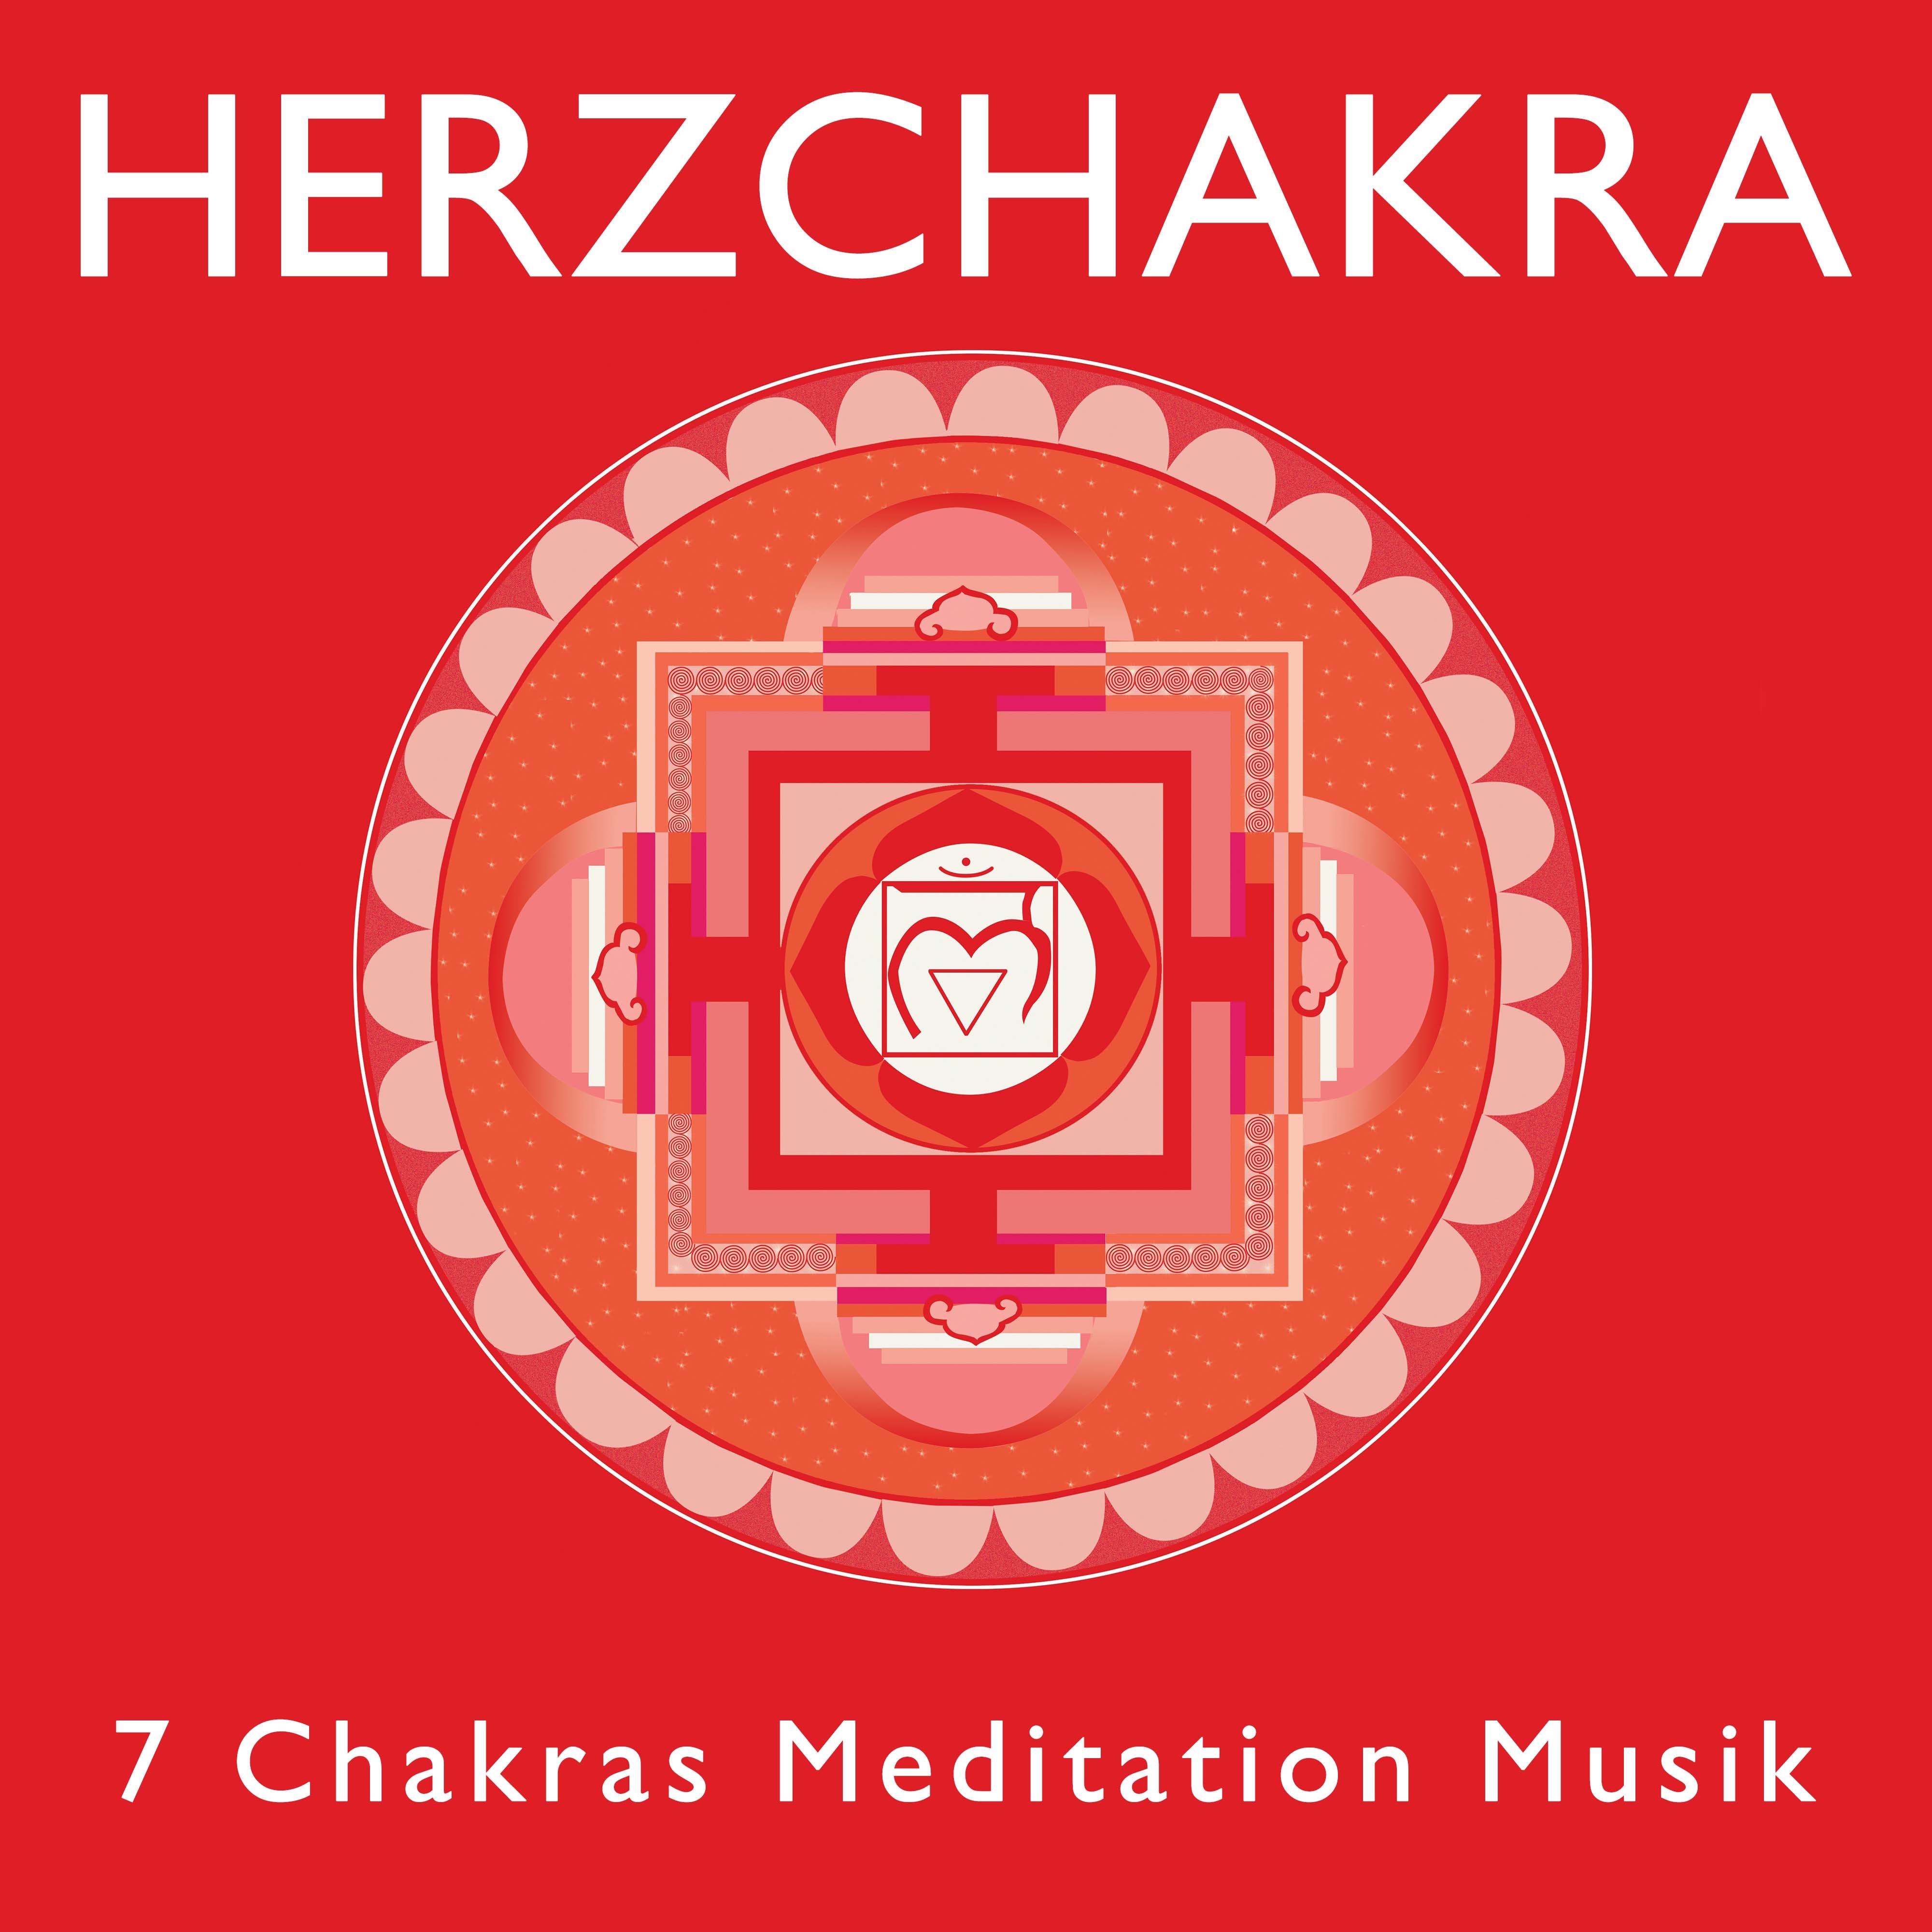 Herzchakra - 7 Chakras Meditation Musik